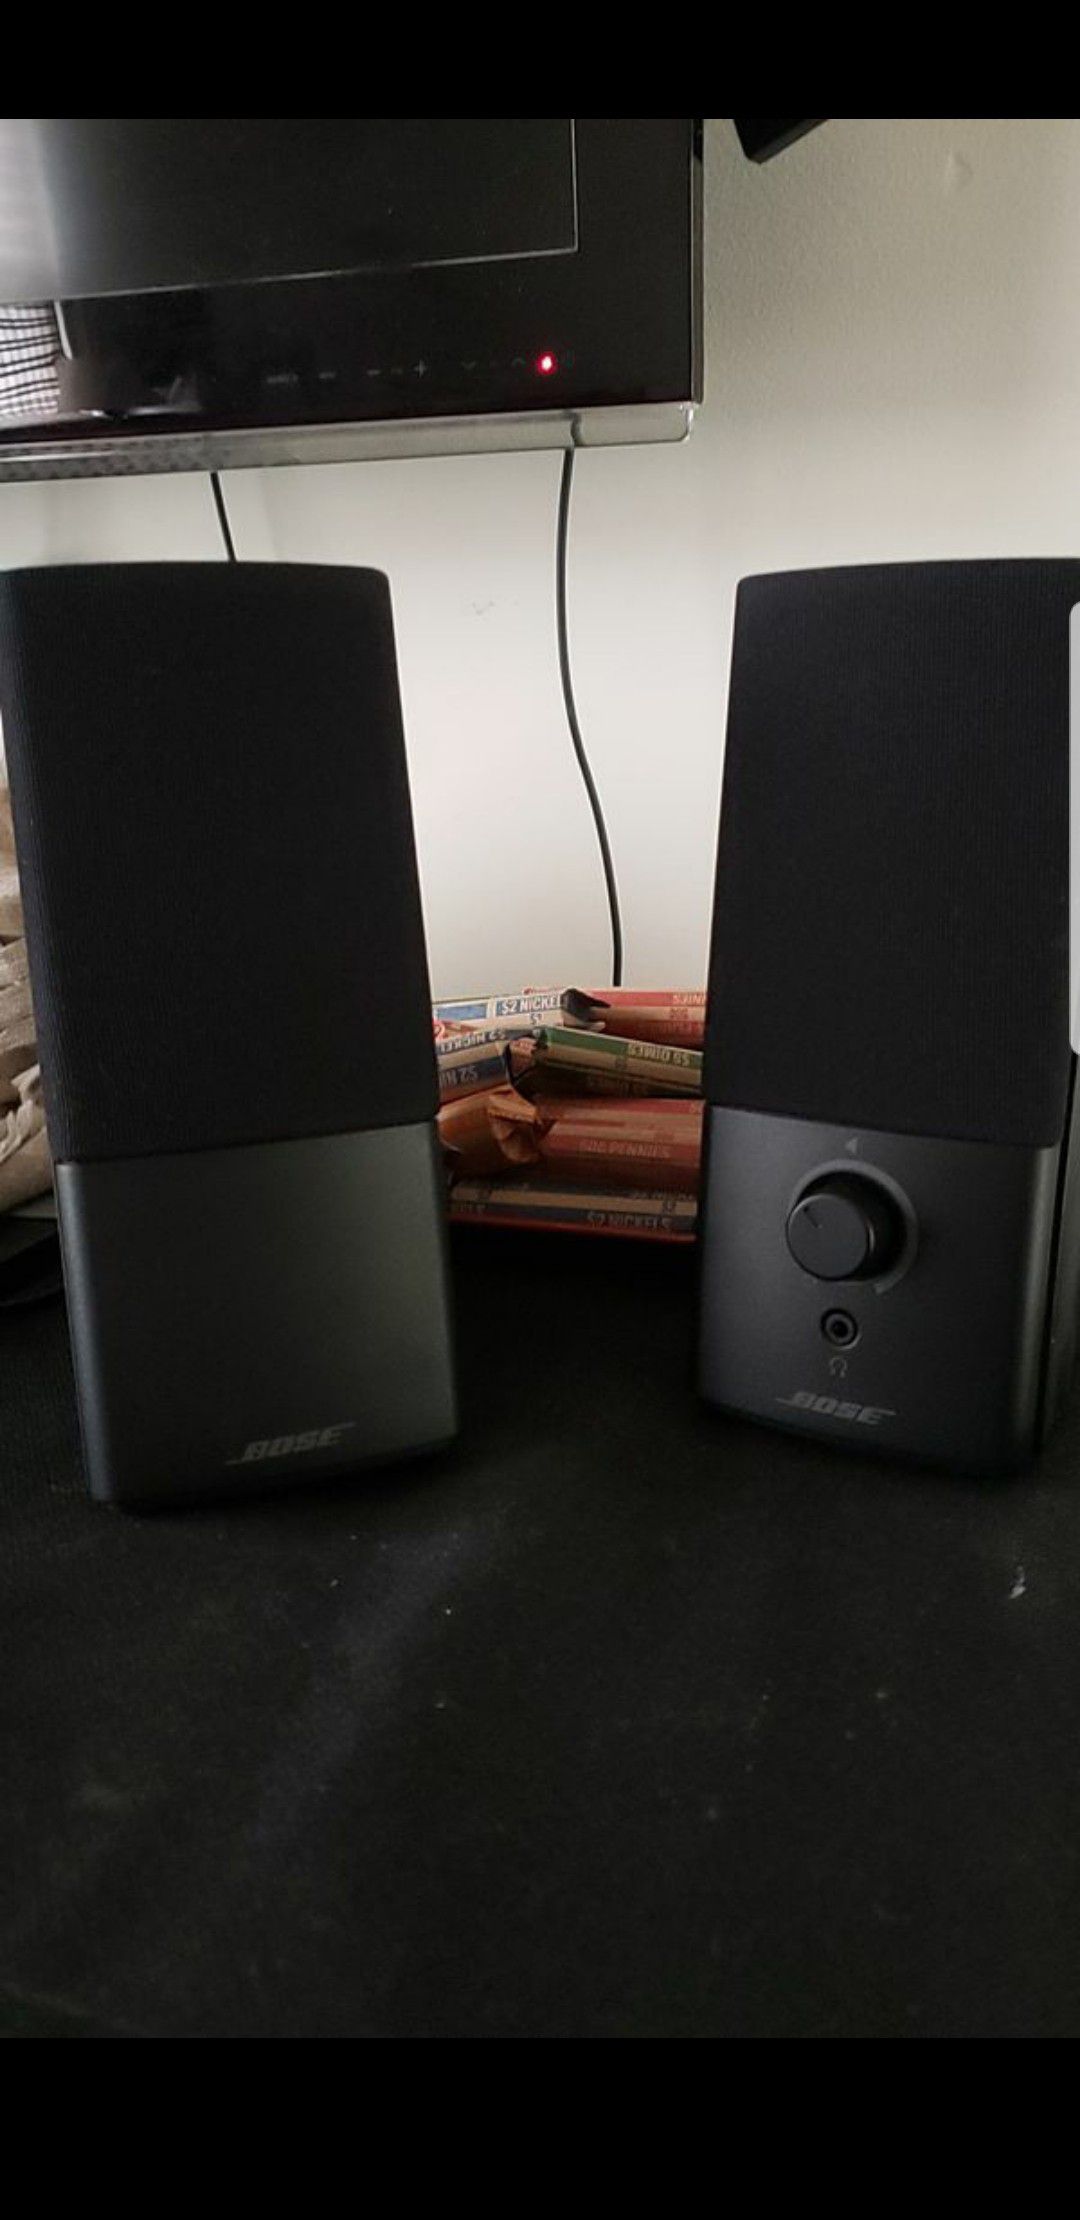 Bose companian speakers